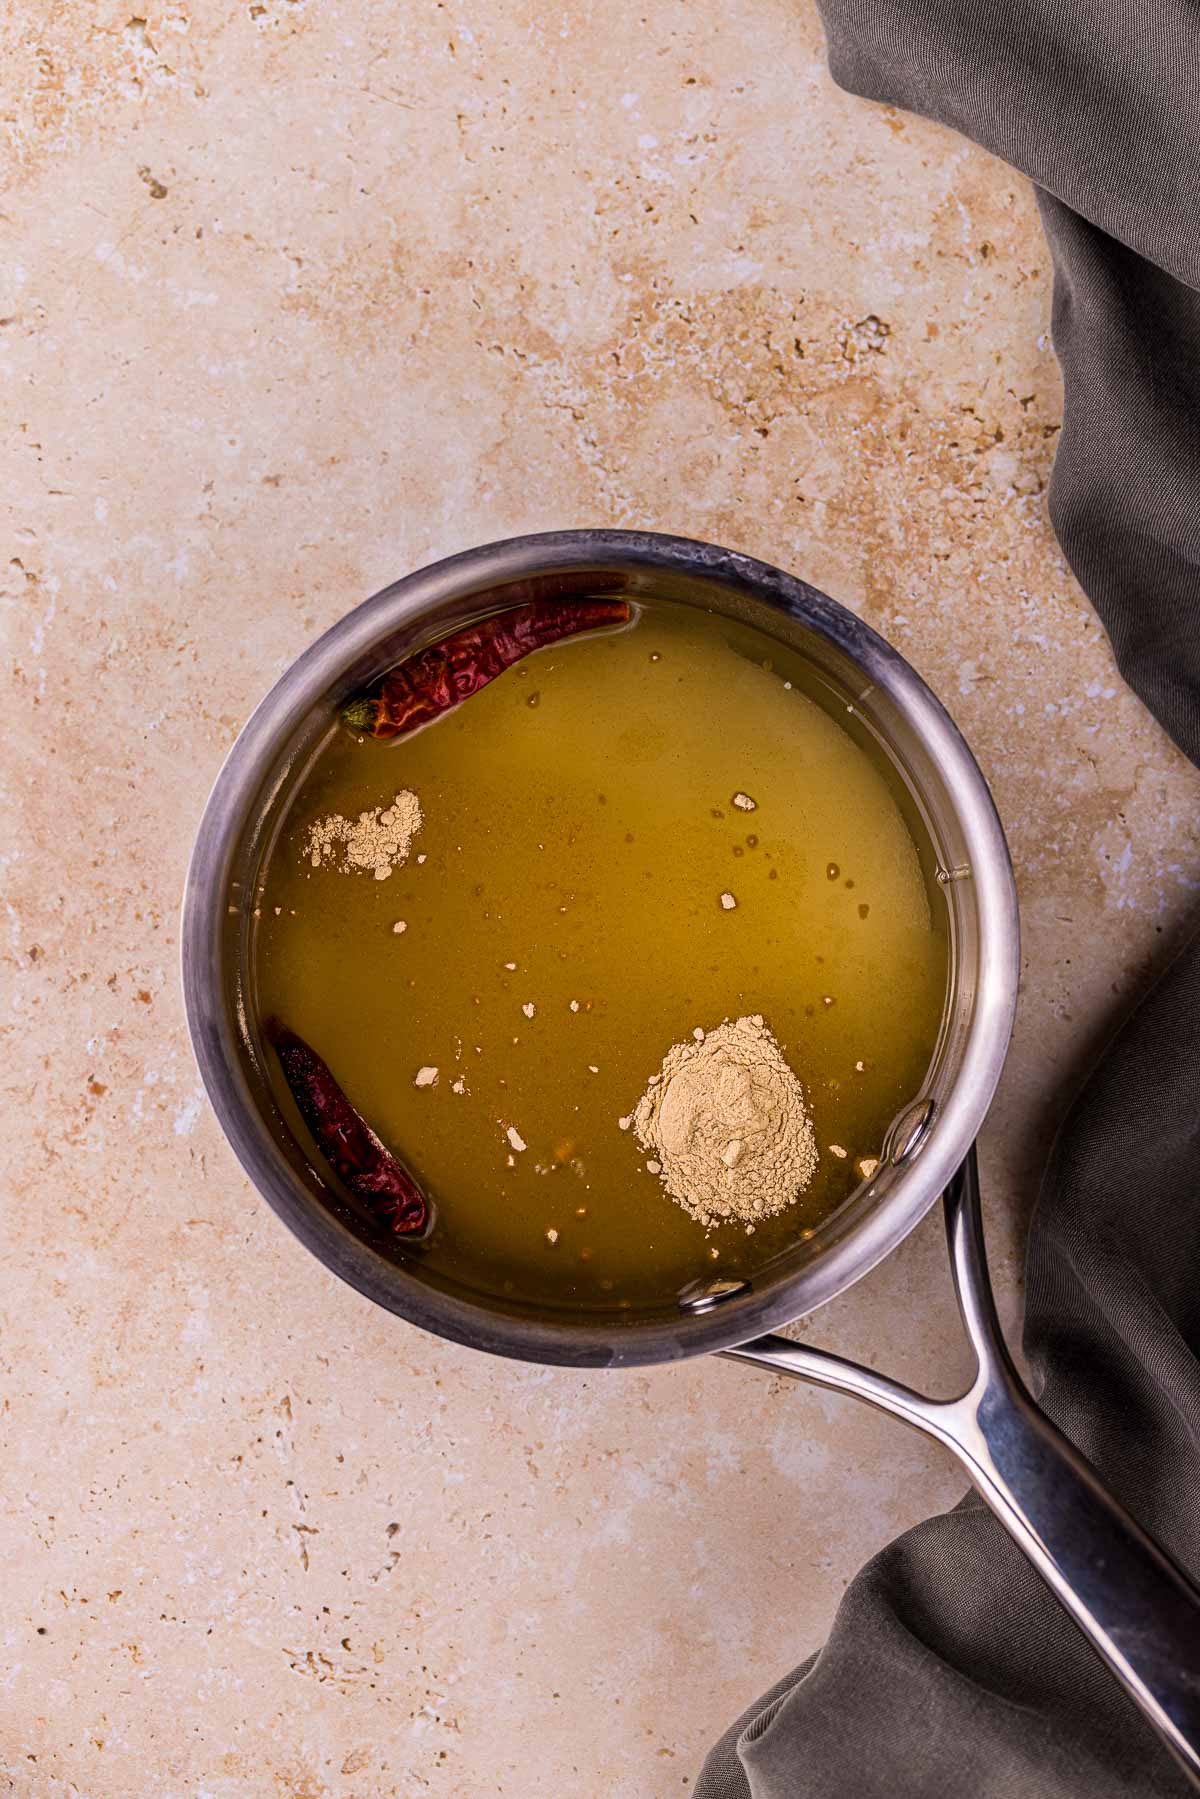 a saucepan with yellow liquid